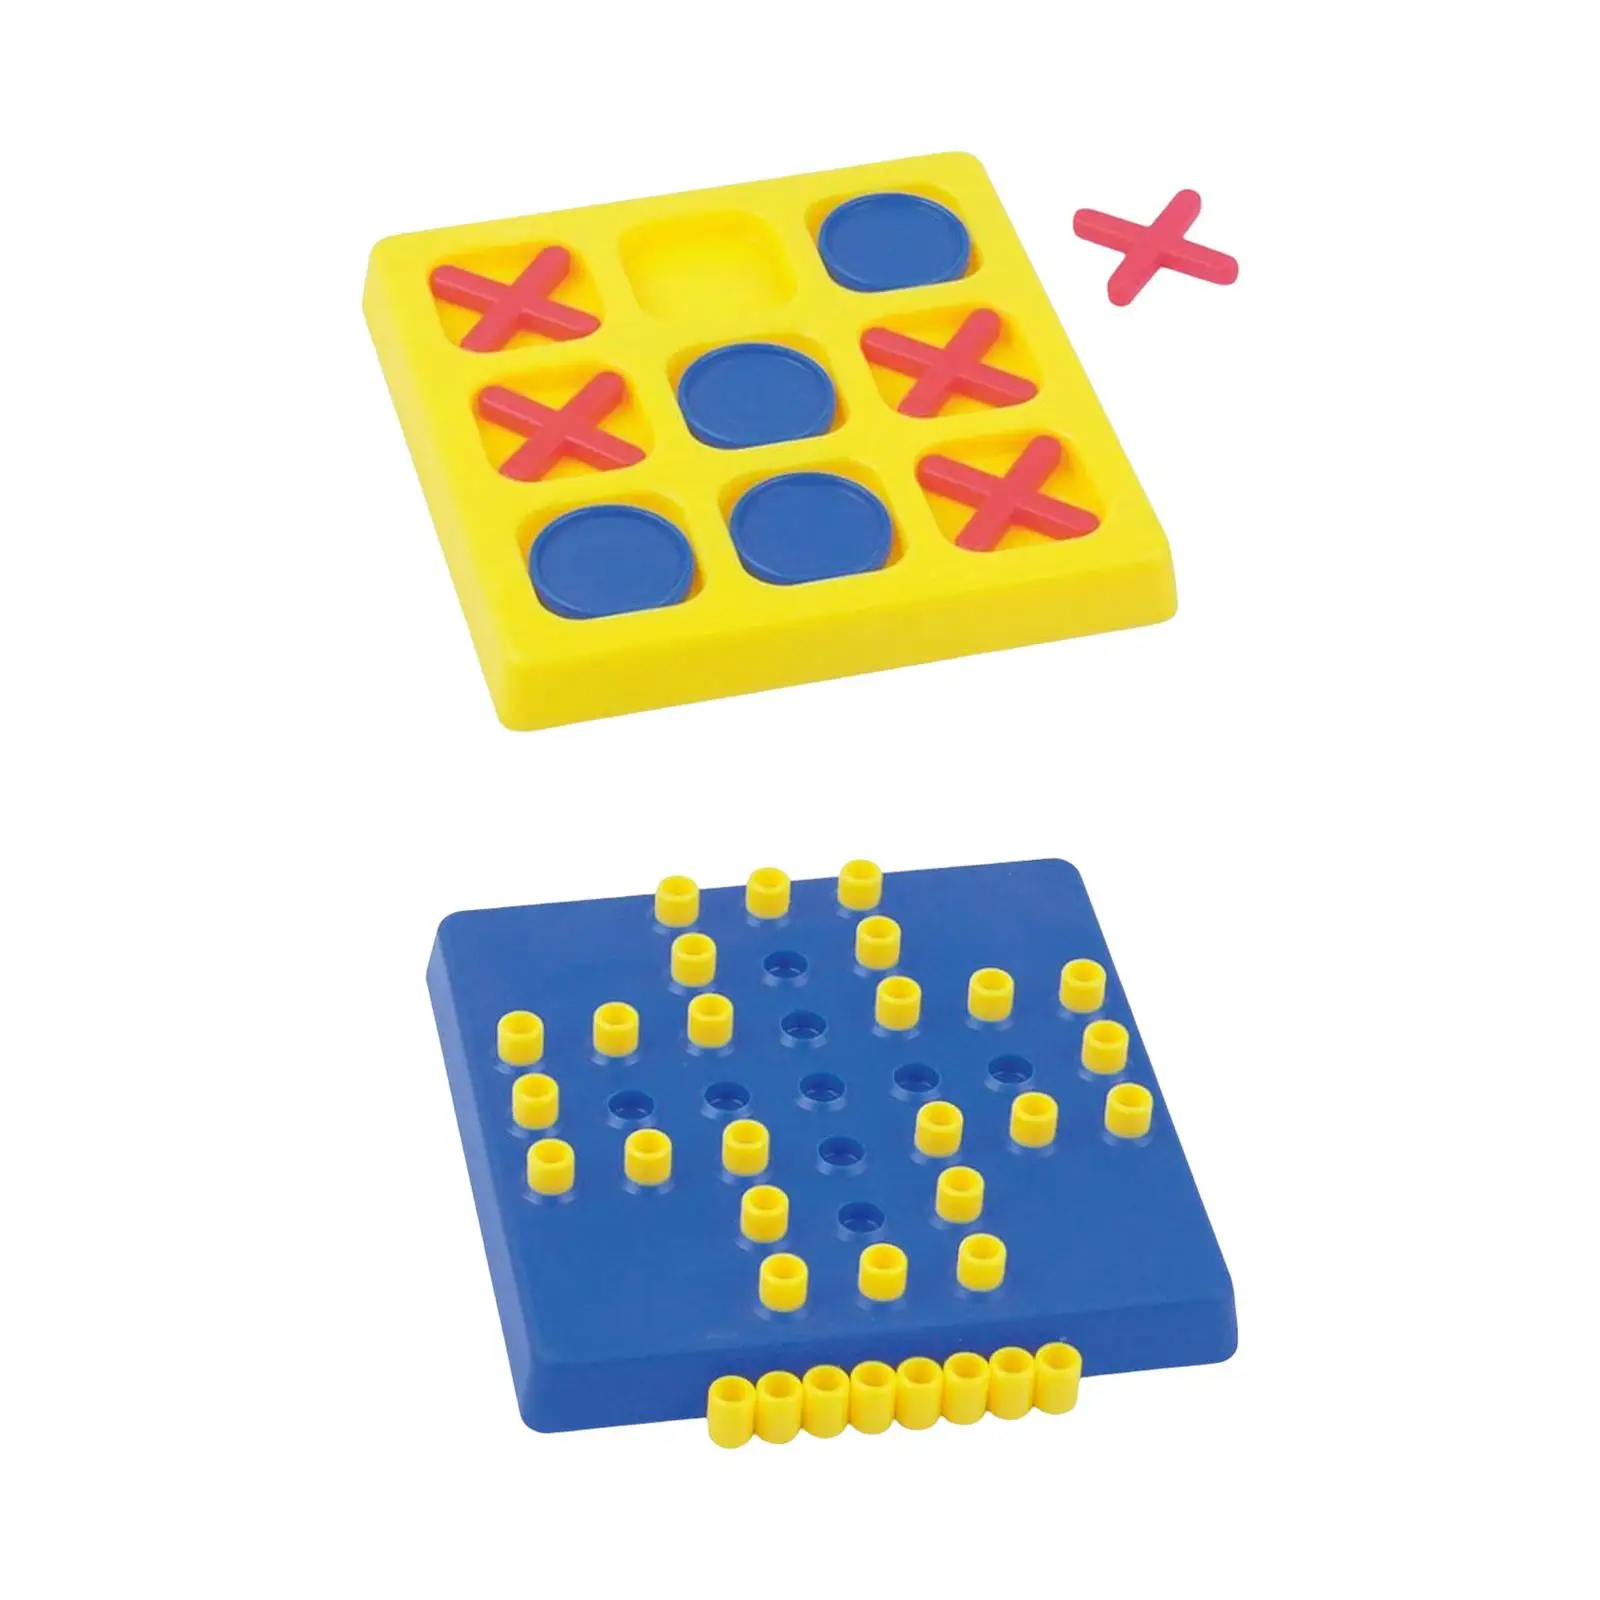 Tic TAC Toe Jump Marbles Intellectual Development Peg Solitaire Board Game for Backyard Entertainment Travel Children